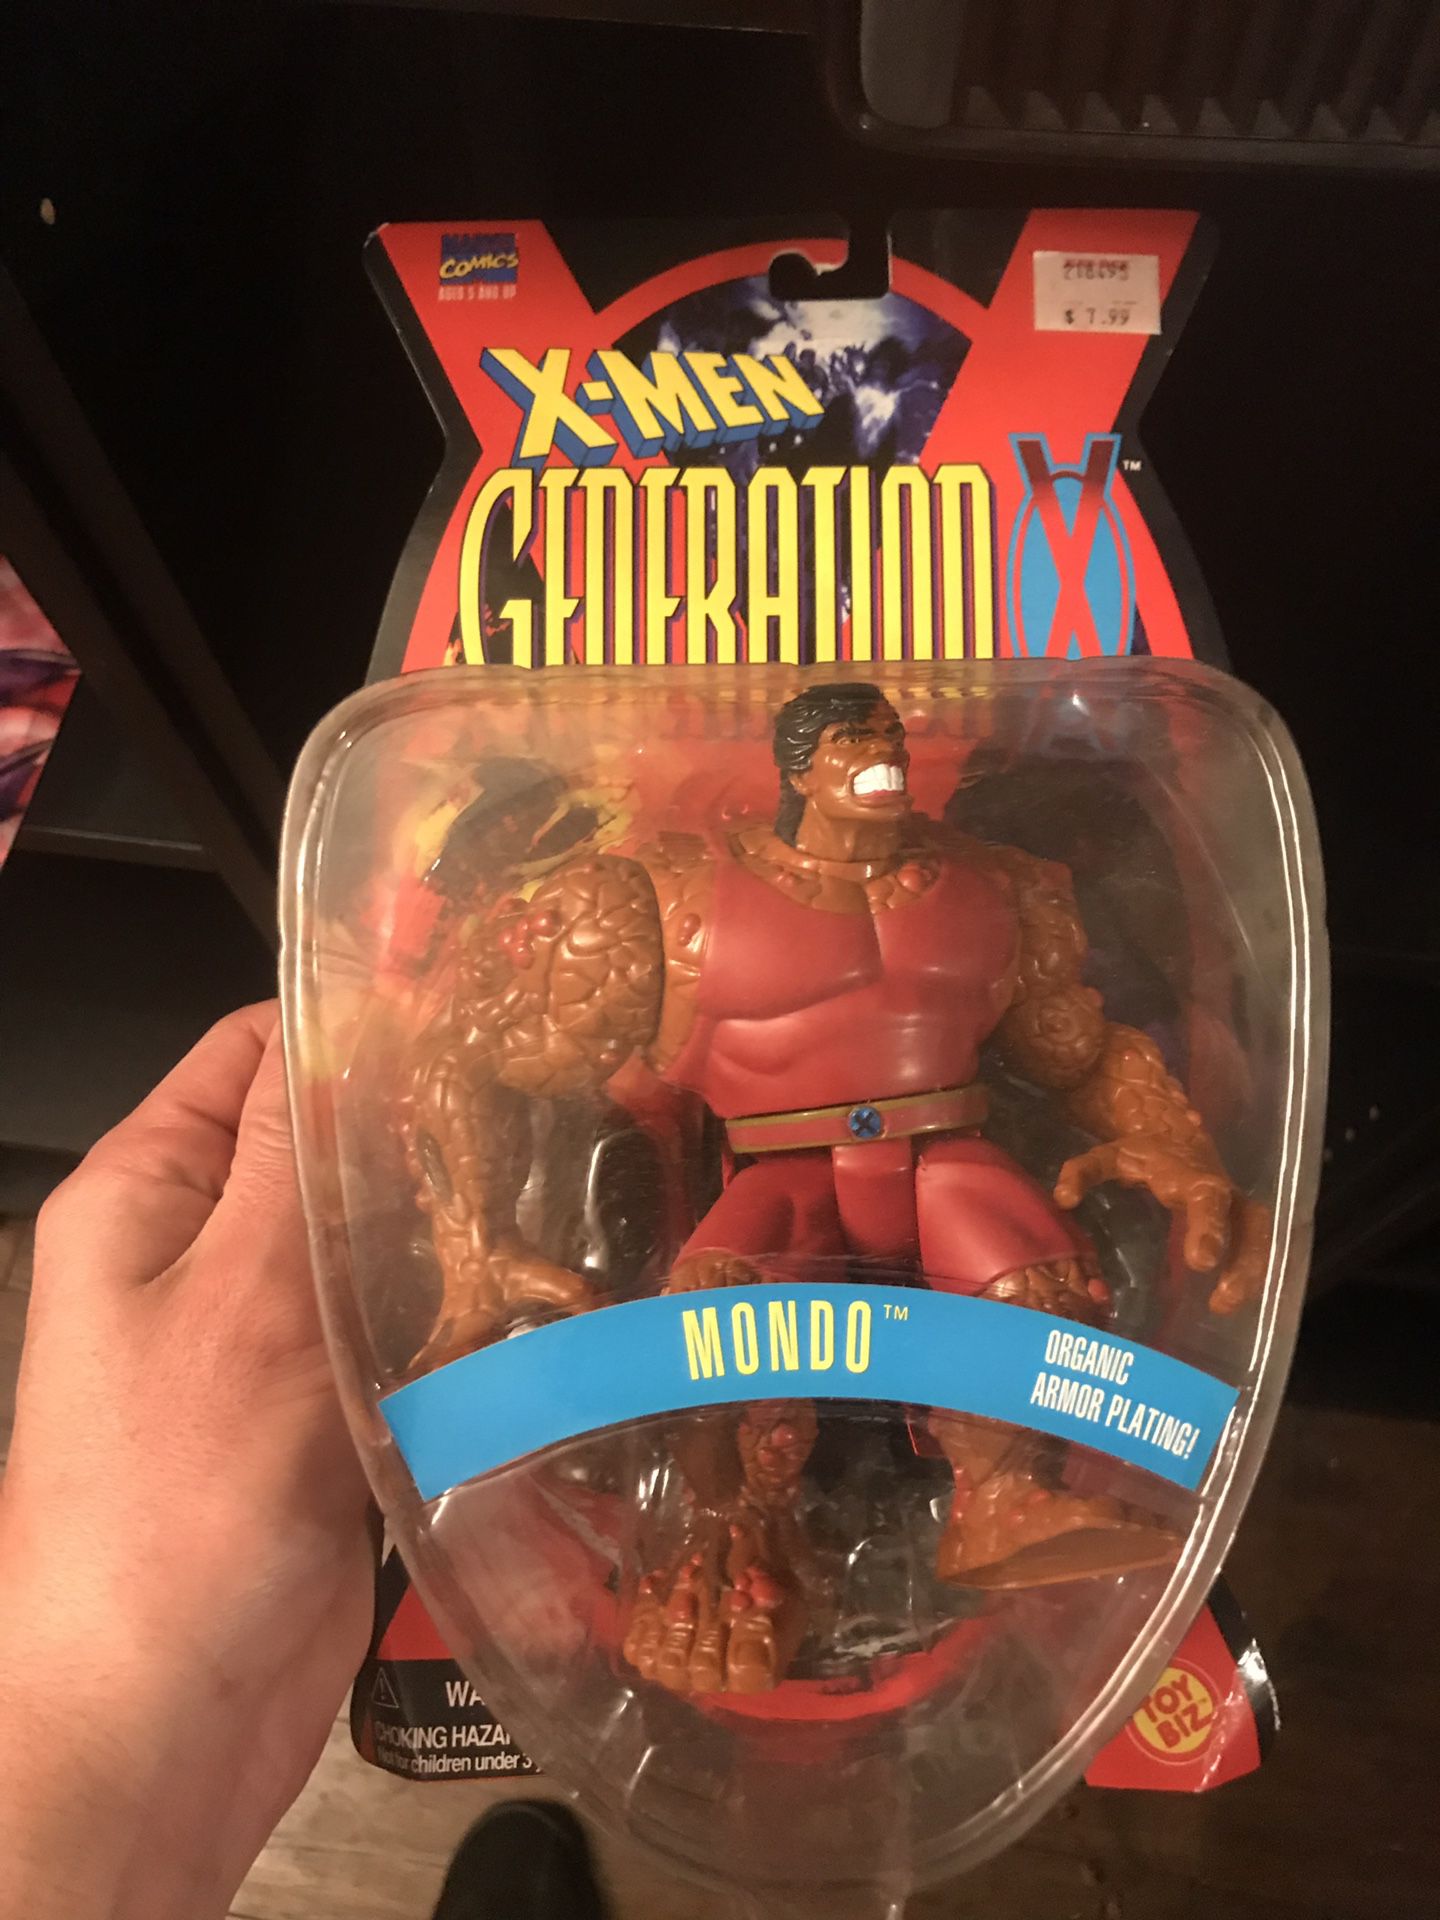 X-men generation x mondo action figure